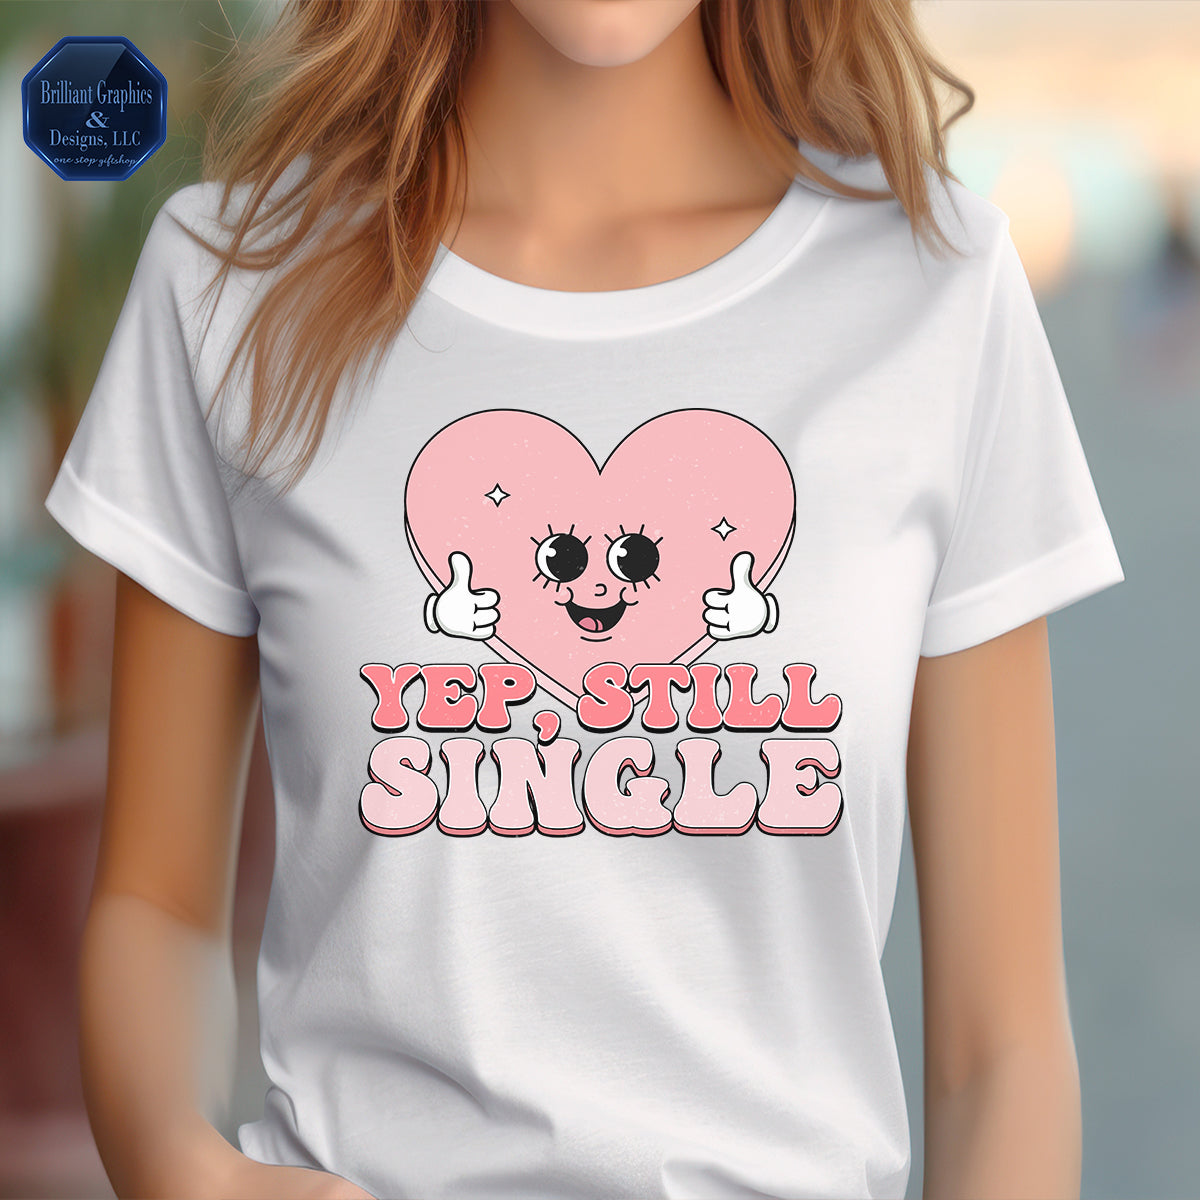 Yep, Still Single. The Anti-Valentine T-shirt